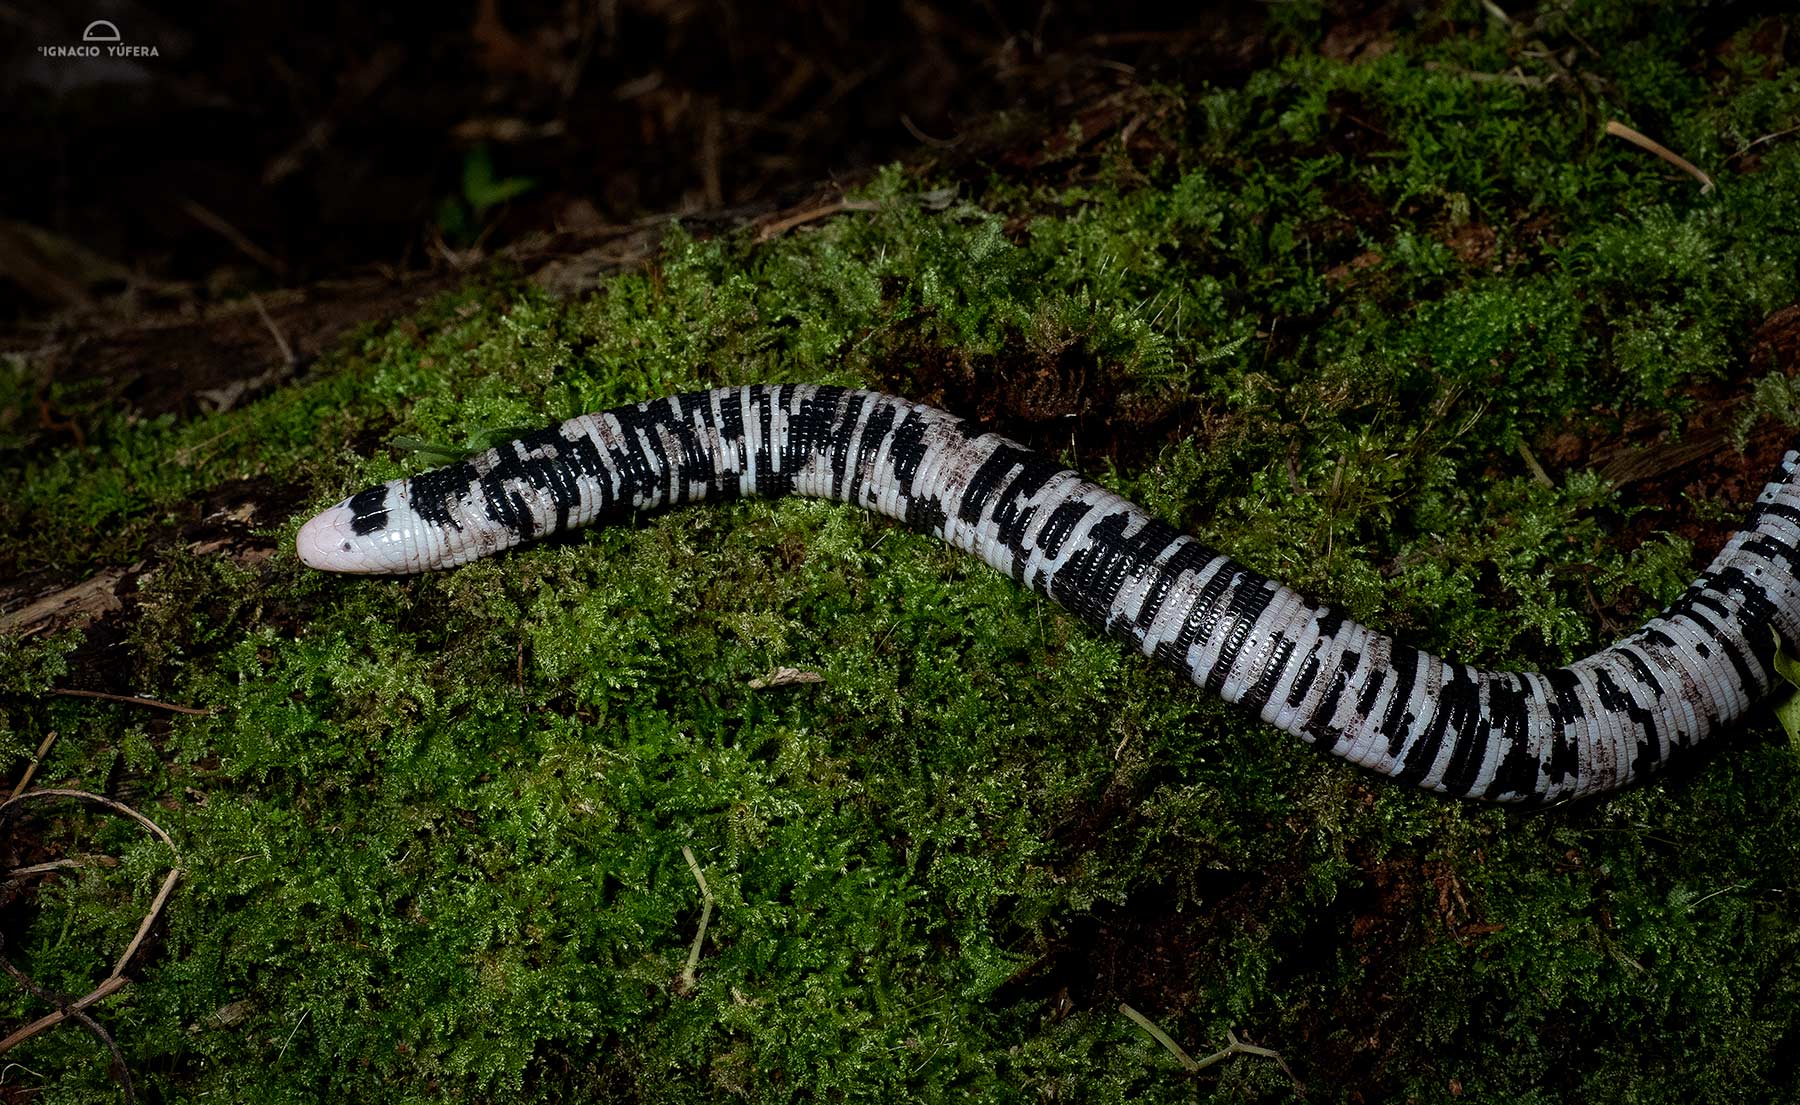 Speckled Worm-lizard (Amphisbaena bassleri), Yasuni National Park, Ecuador